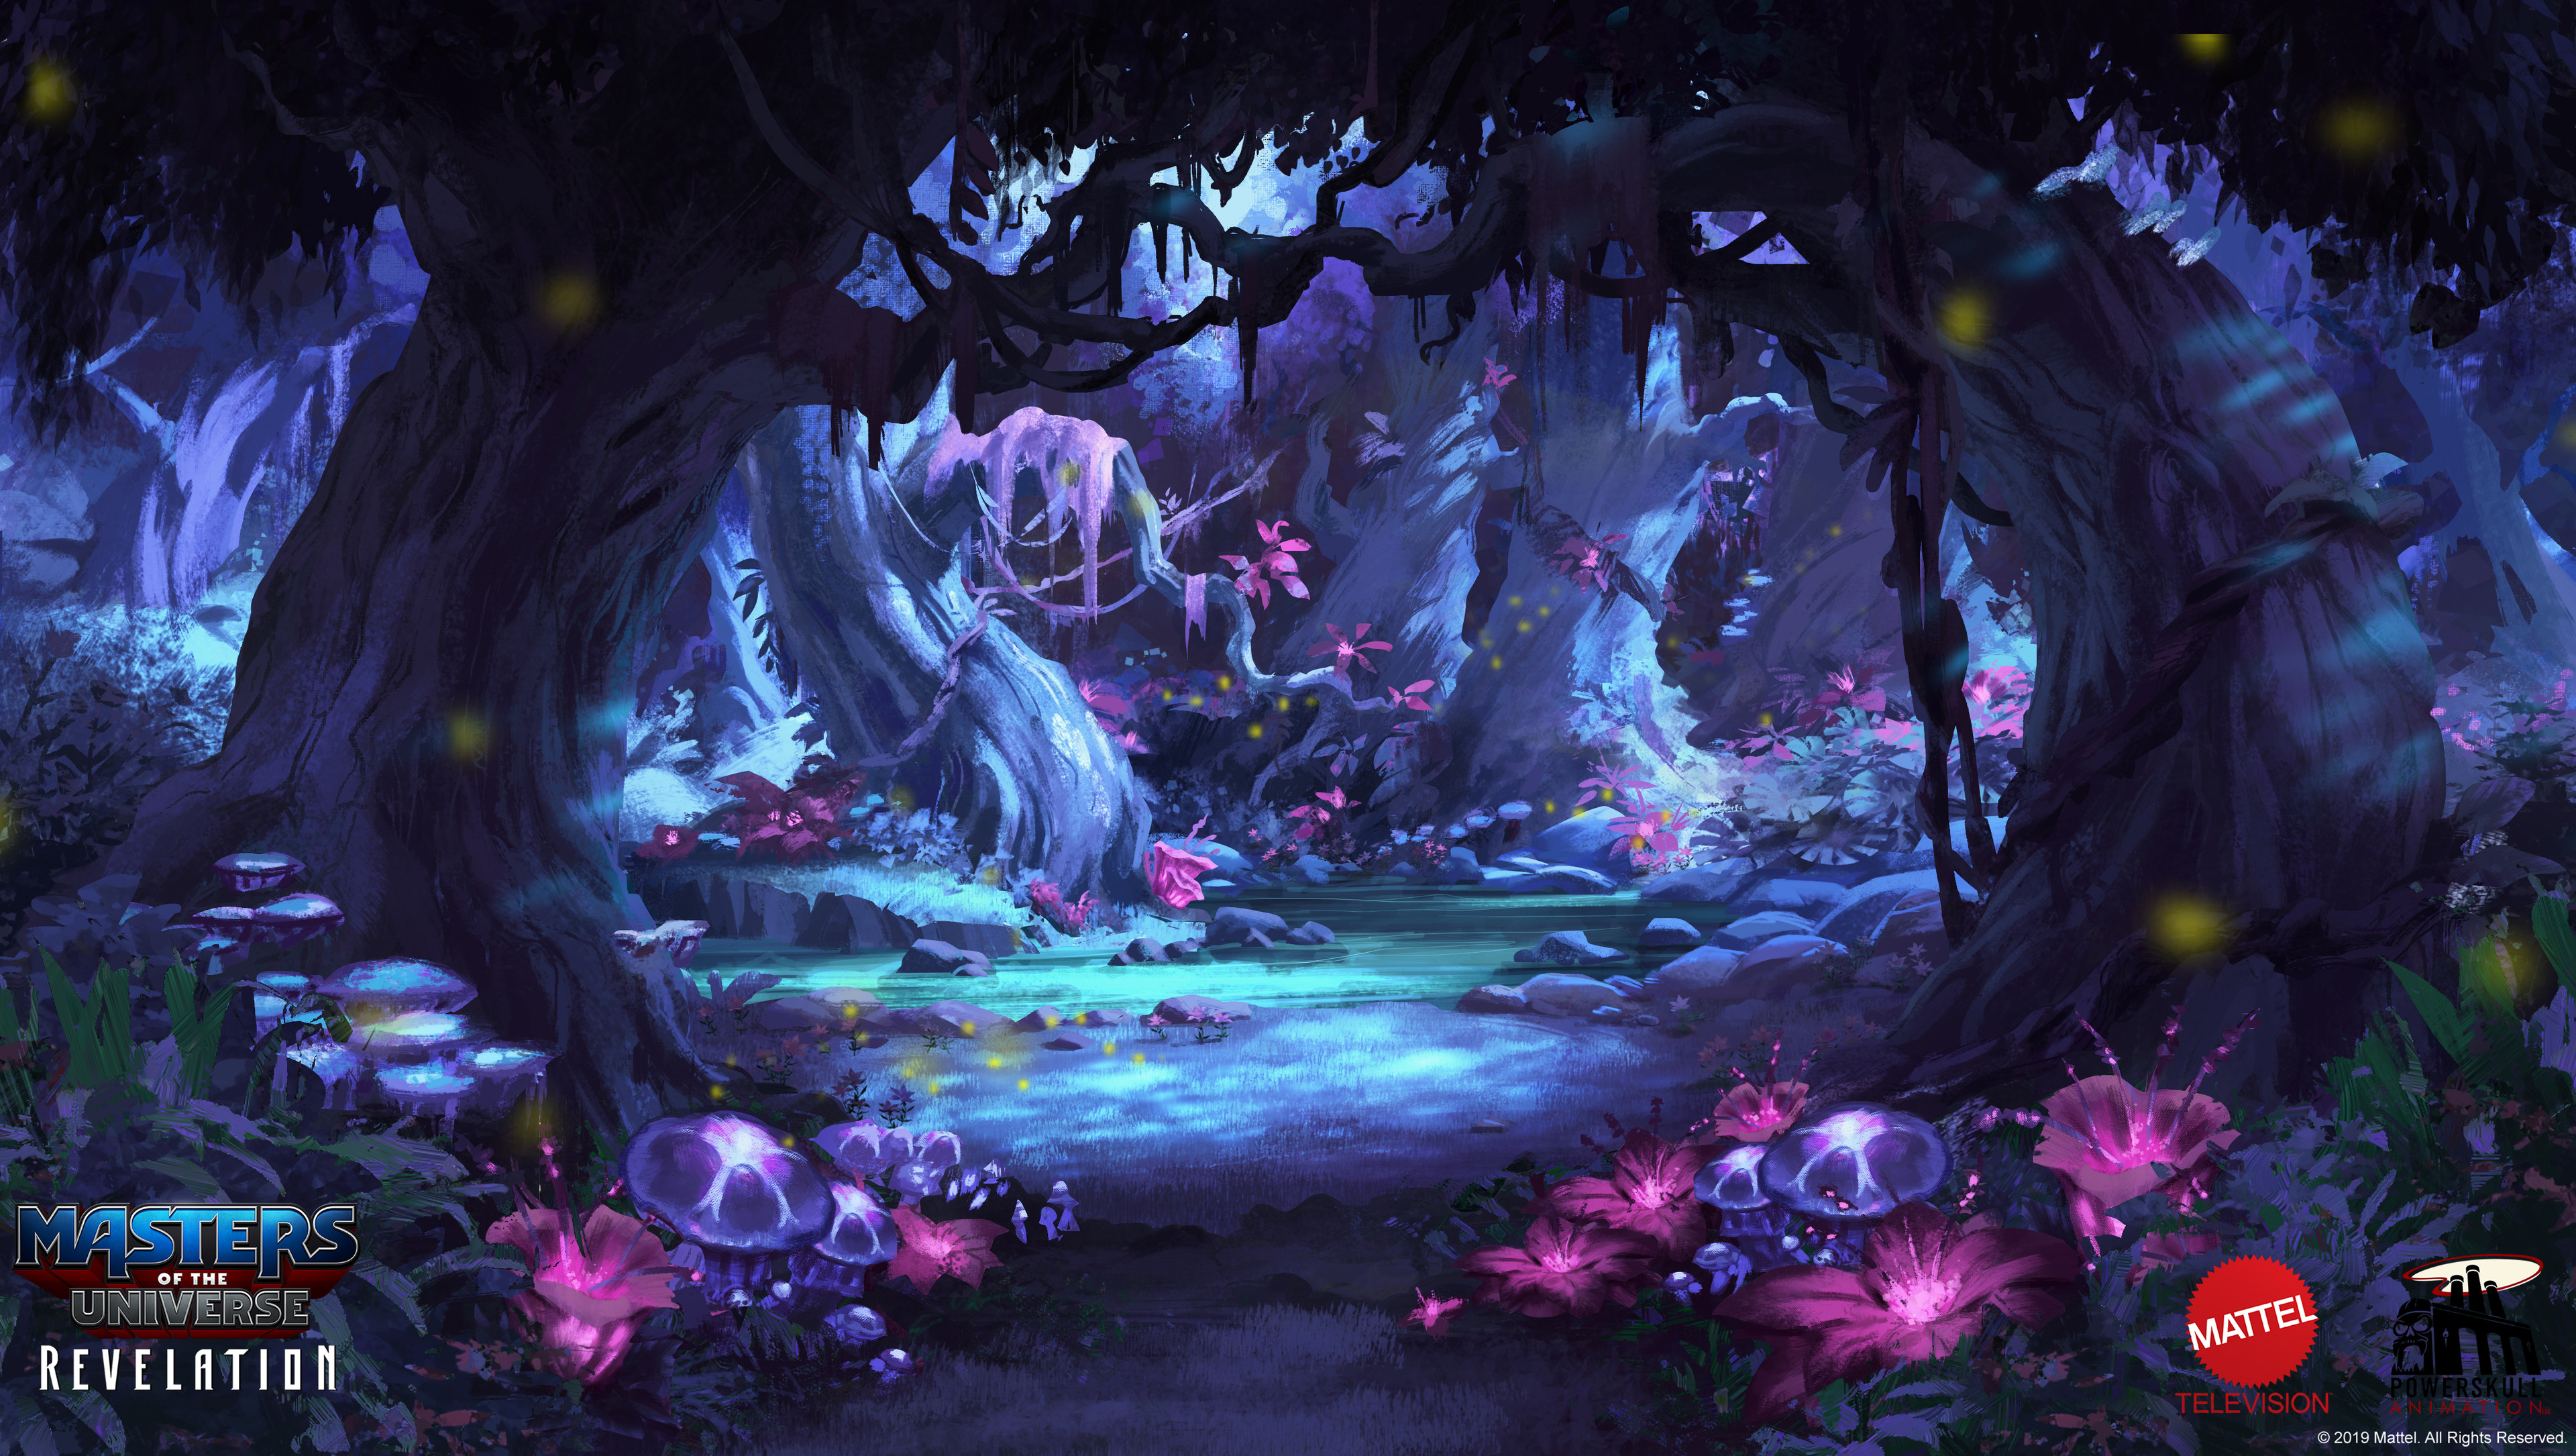 Masters of the Universe: Revelation enchanted forest scene HD desktop wallpaper.